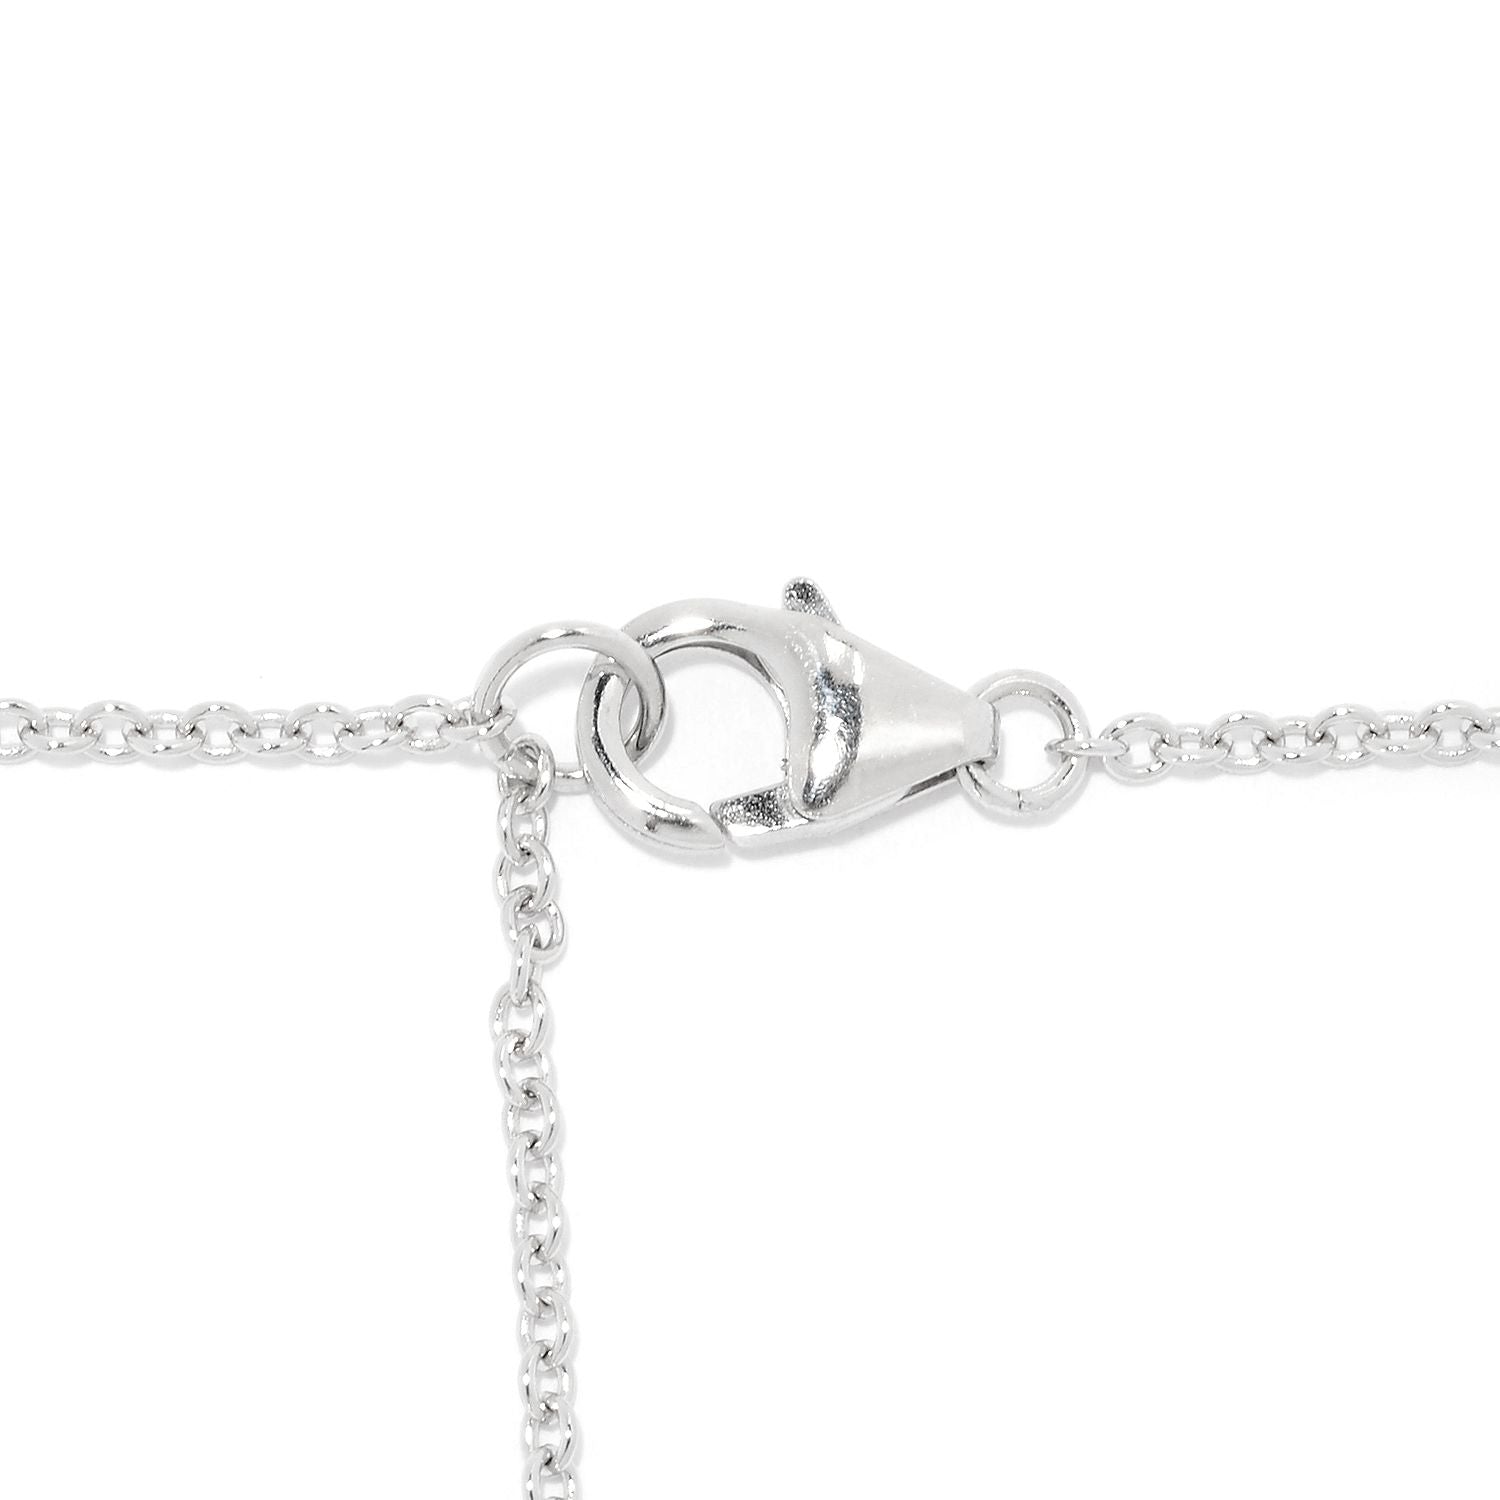 Gems en Vogue One-of-a-kind 8.30ctw Peridot & White Zircon Butterfly Necklace